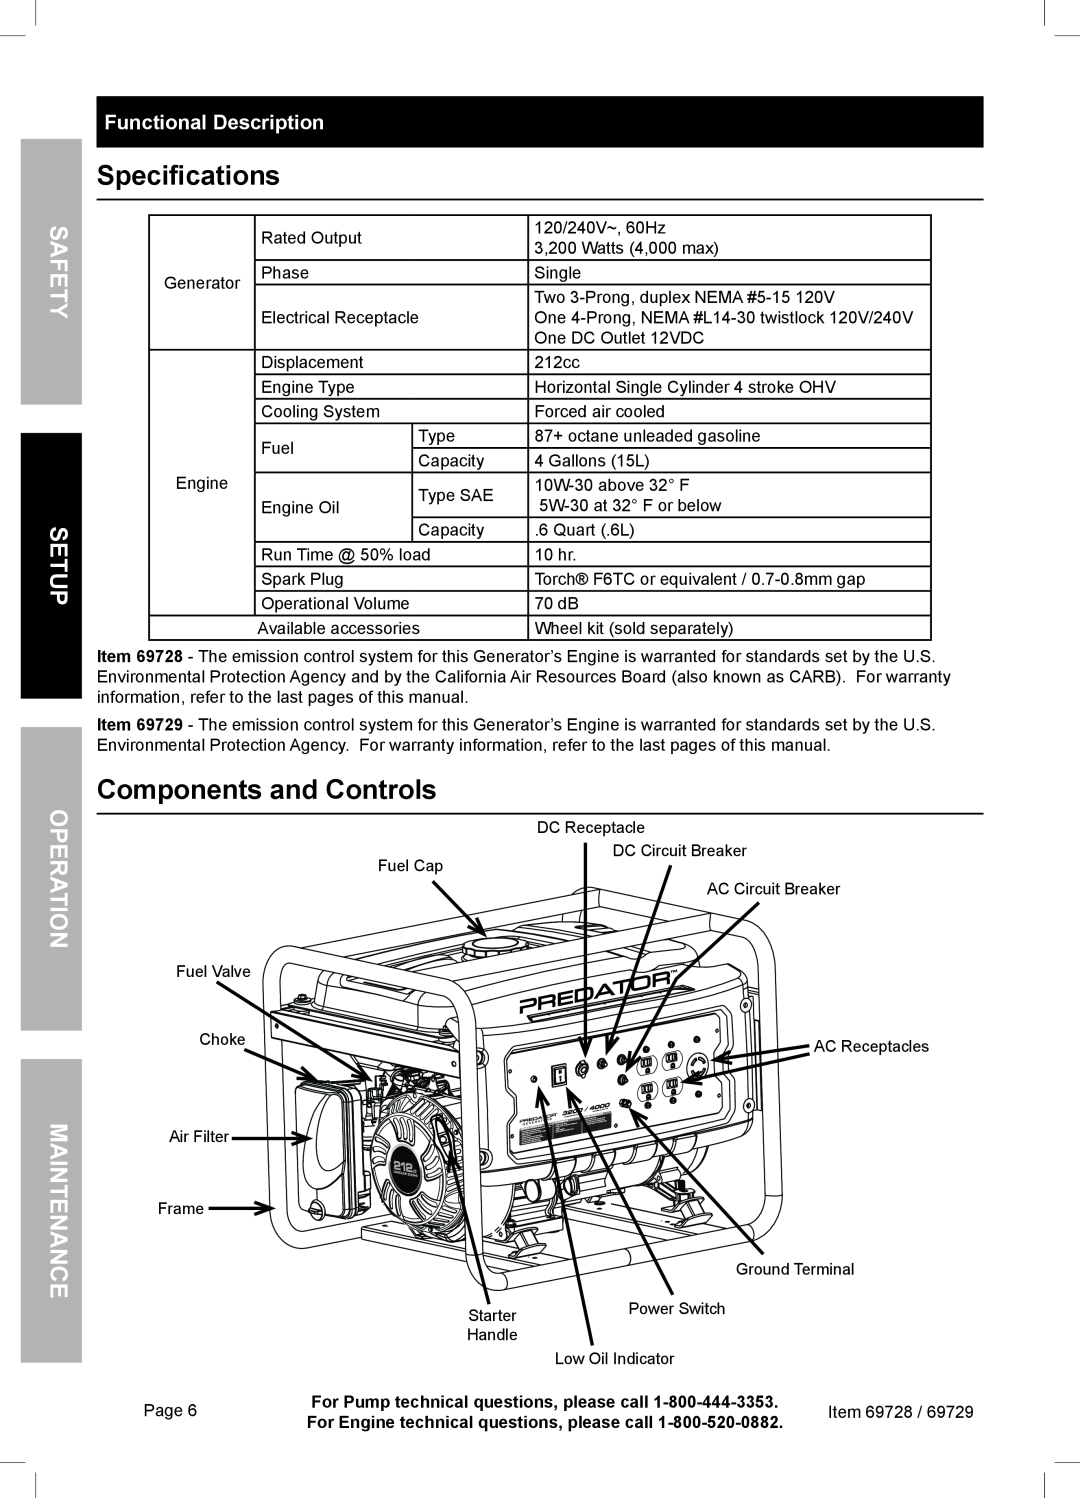 Harbor Freight Tools 69728 Specifications, Components and Controls, y fet Sa p Setu ratiepO, Functional Description 